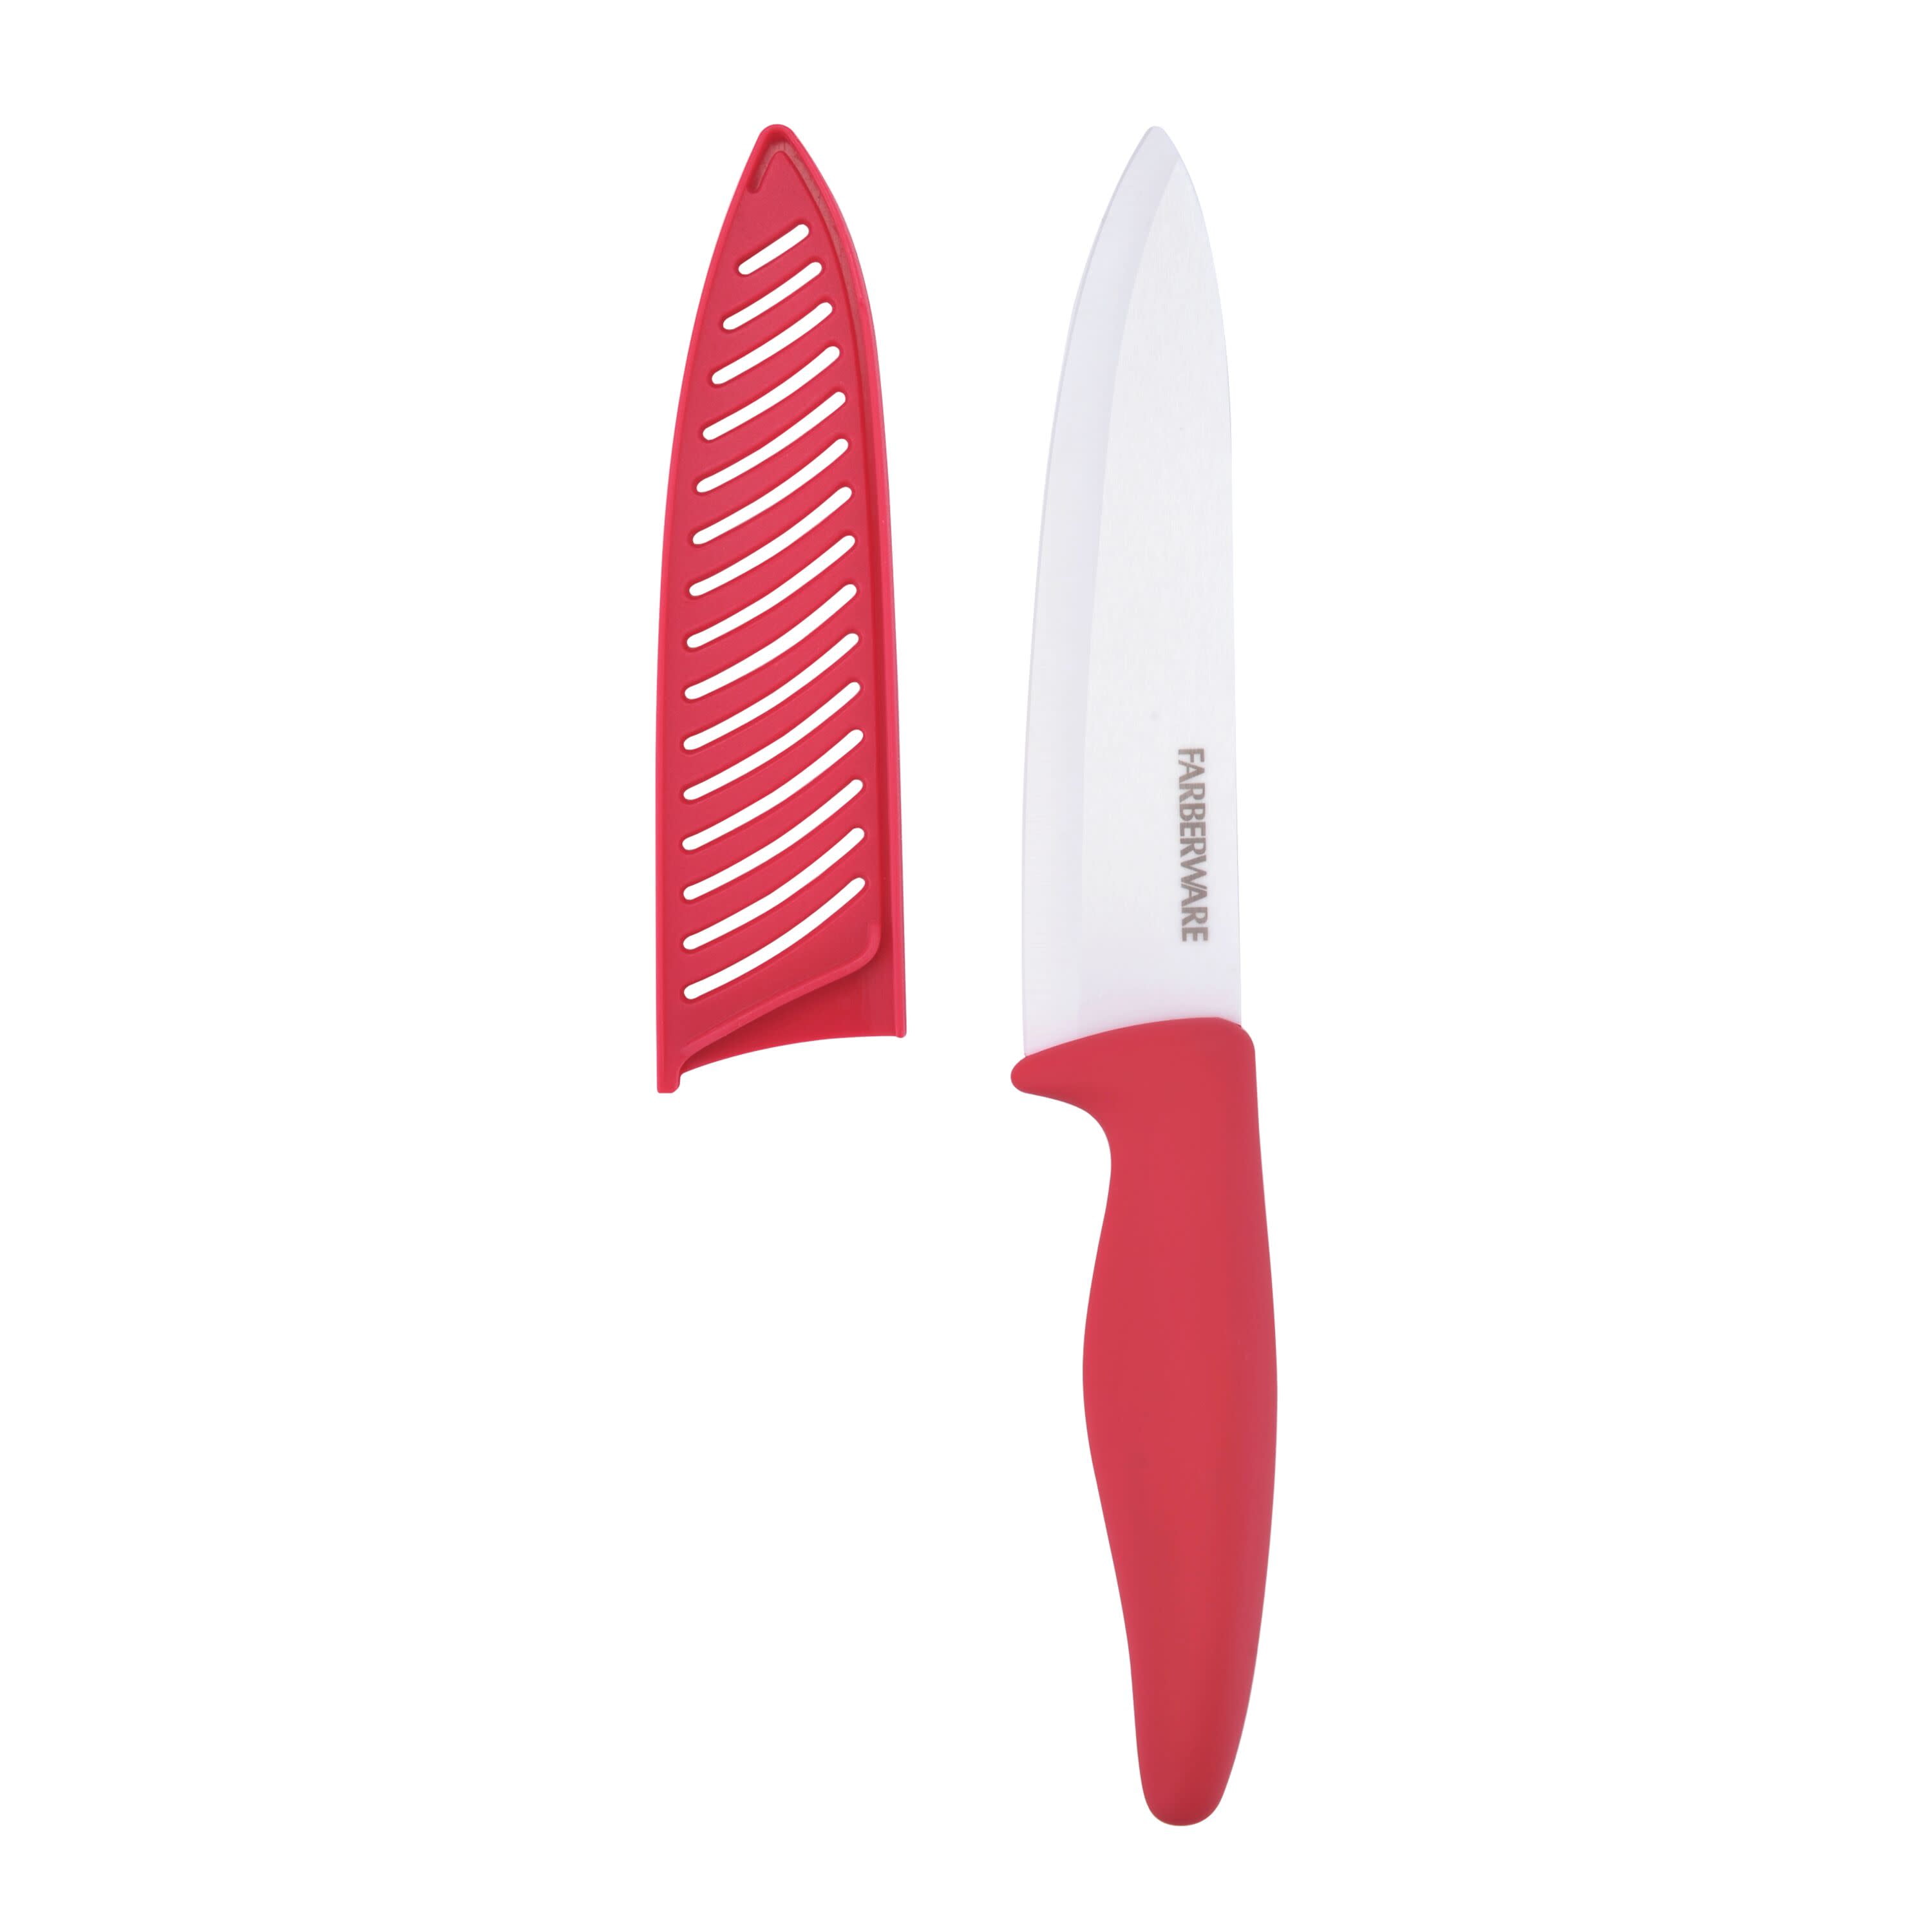 SHIP TO SHORE 6 in. Ceramic Chef's Knife for $9.99 – Harbor